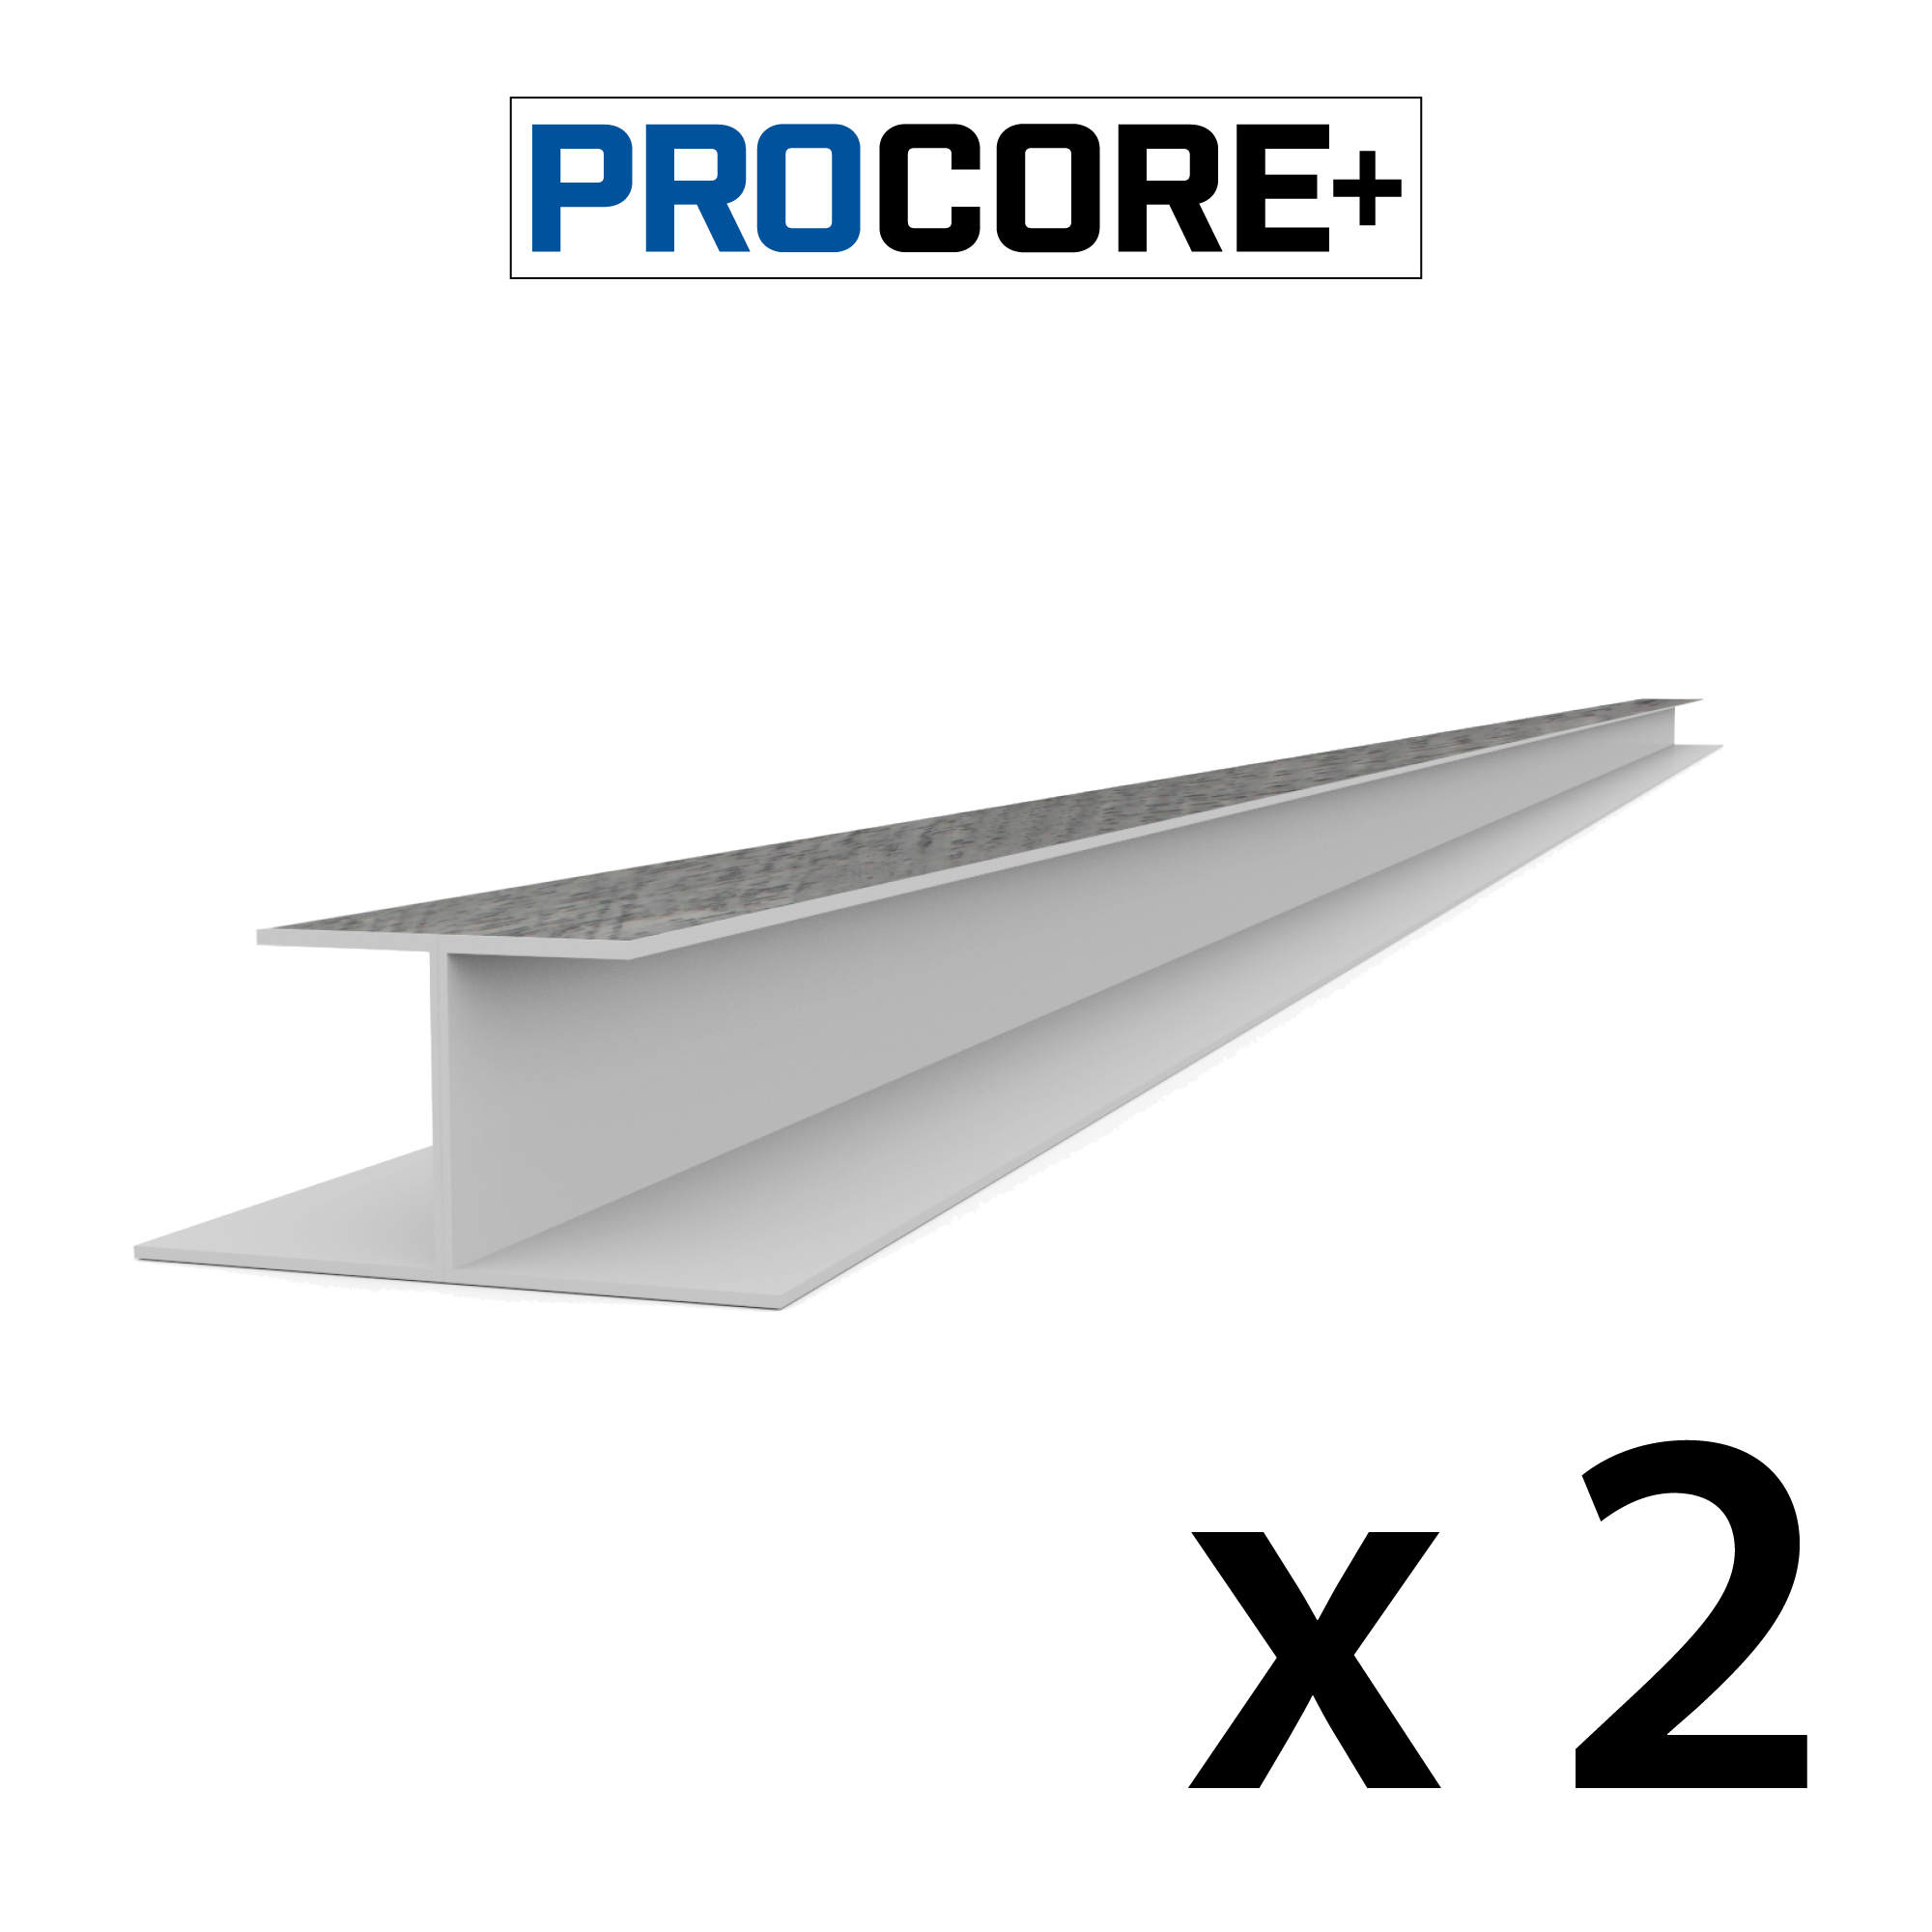 8 ft. PROCORE+ Gray Wood PVC H-Trim Pack